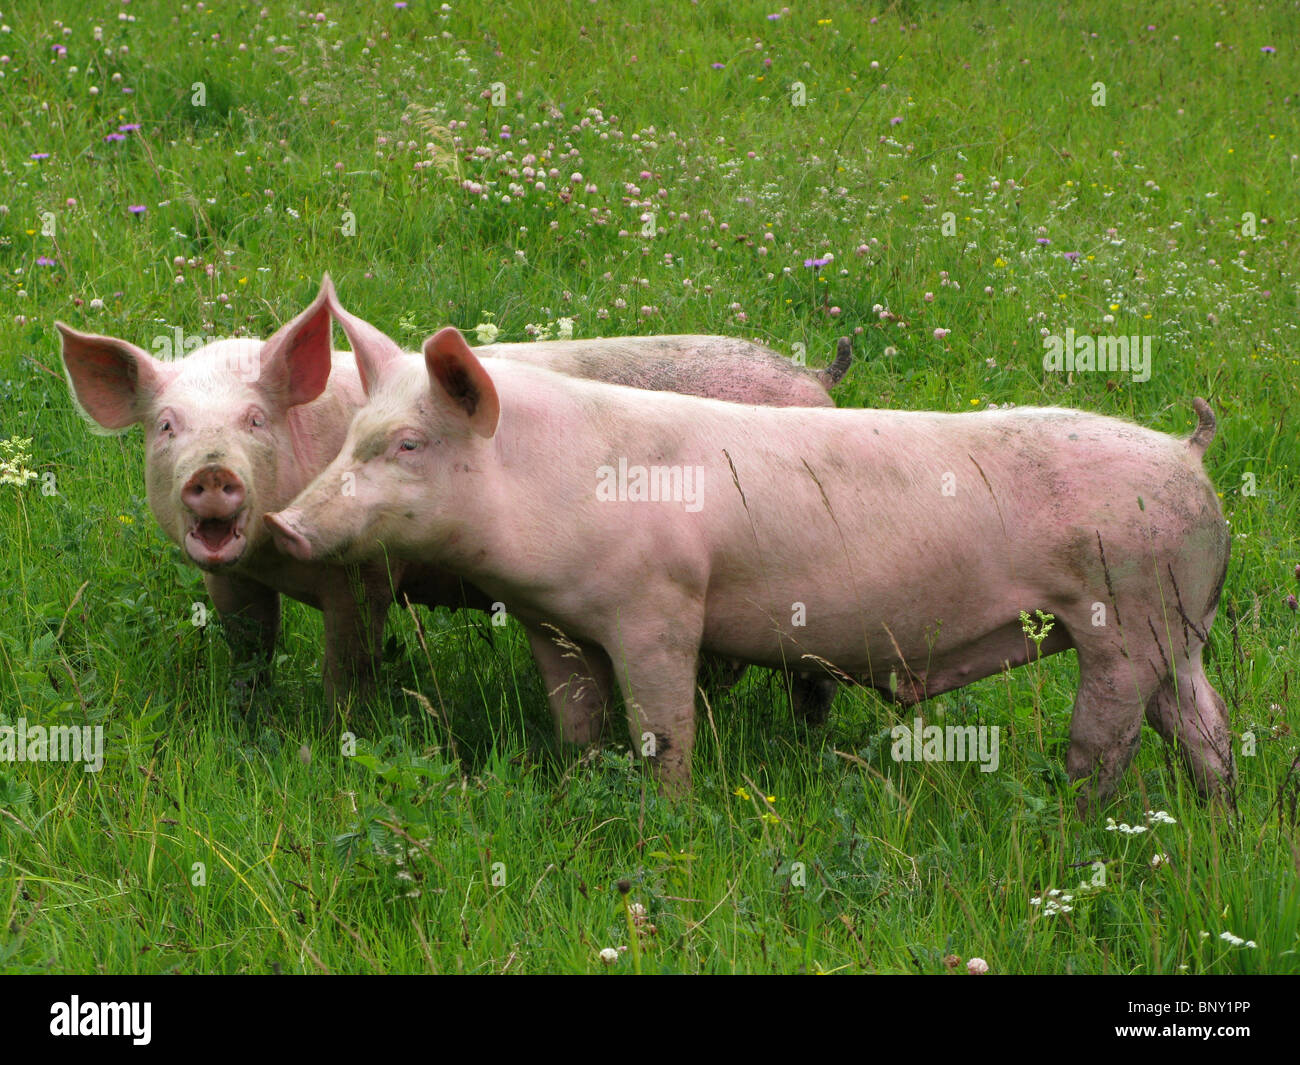 Les porcs, les porcs, les porcs à l'extérieur dans un champ, les porcs en liberté Banque D'Images